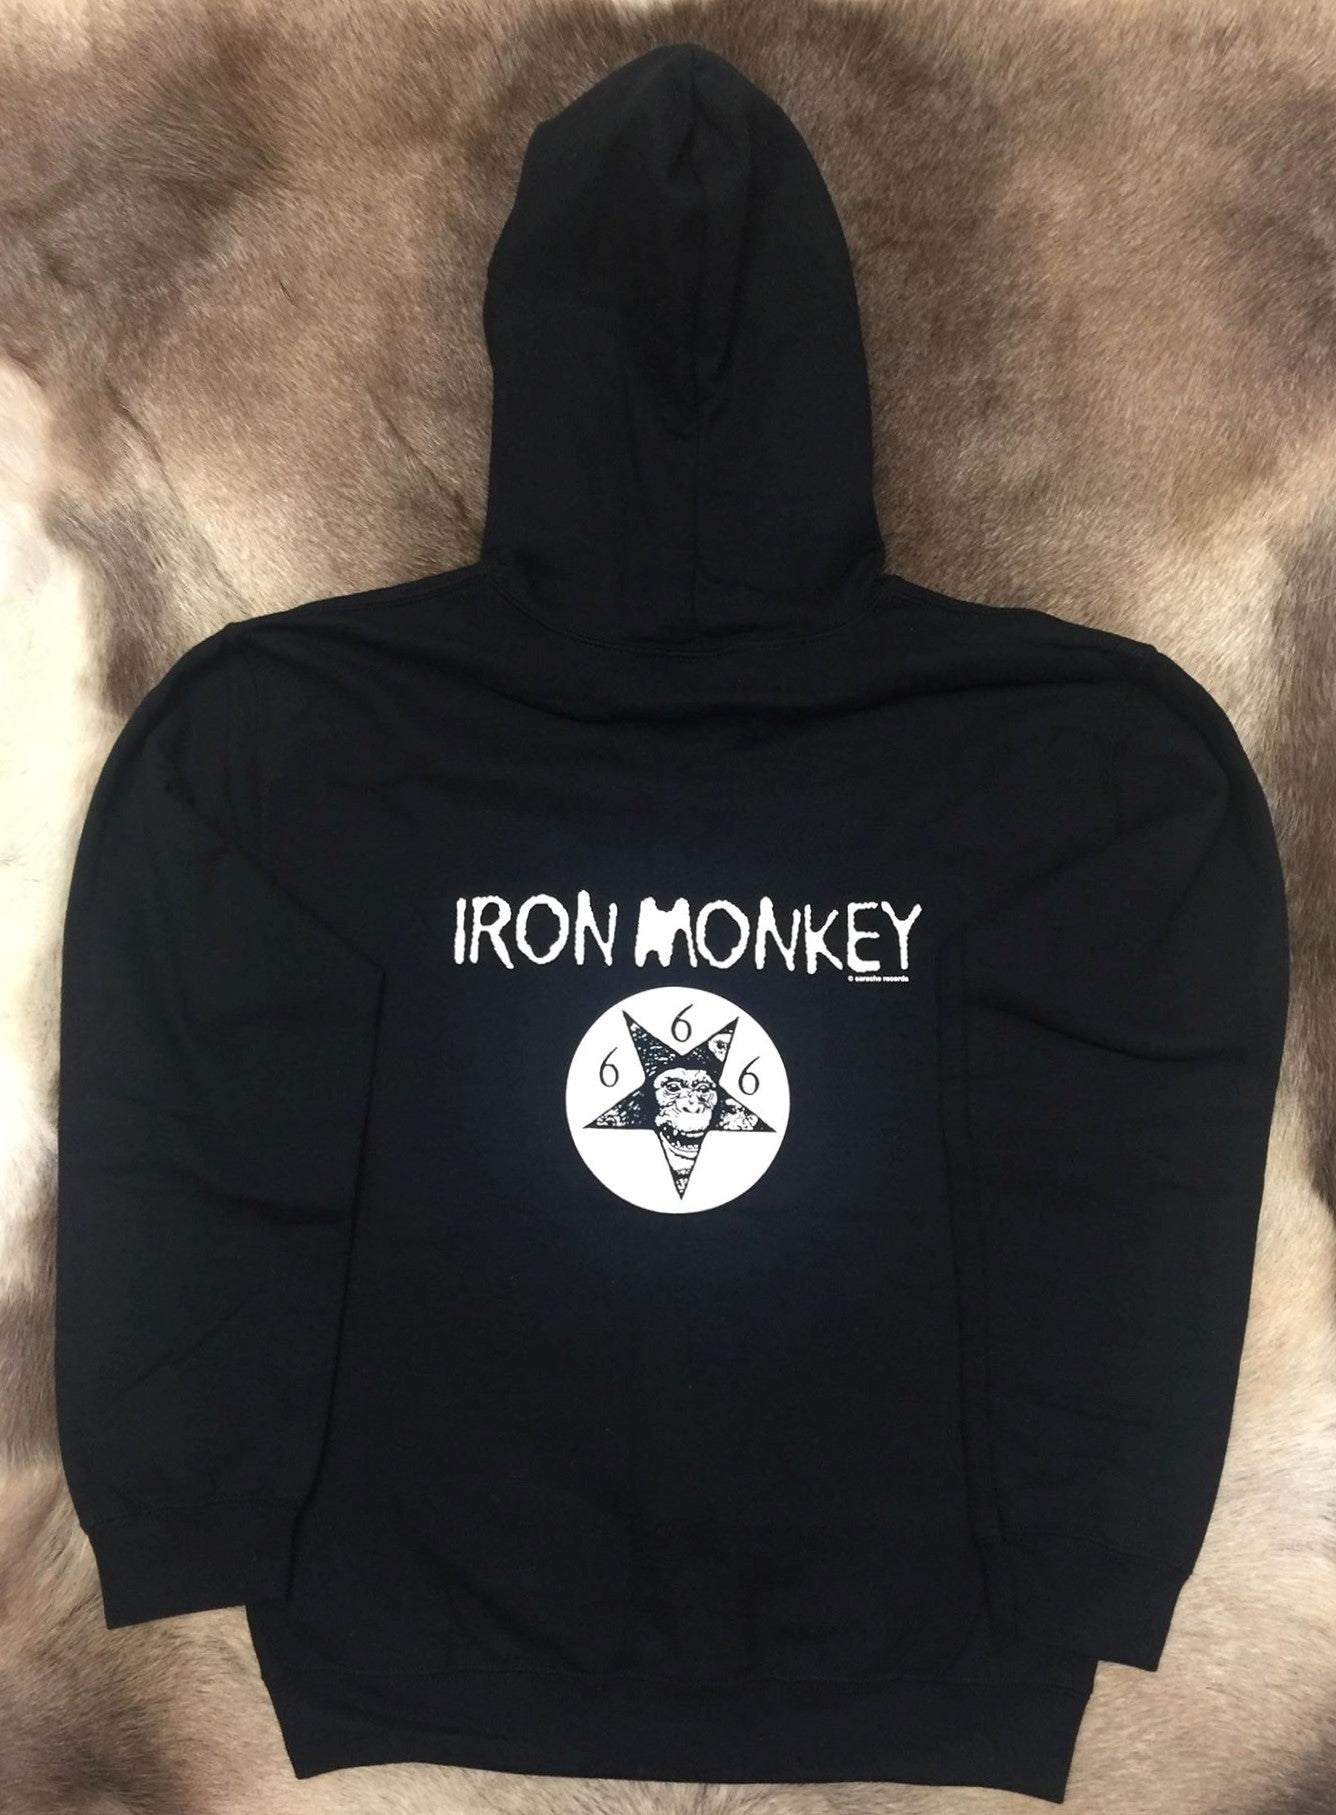 Iron Monkey - Monkeygram Hooded Top